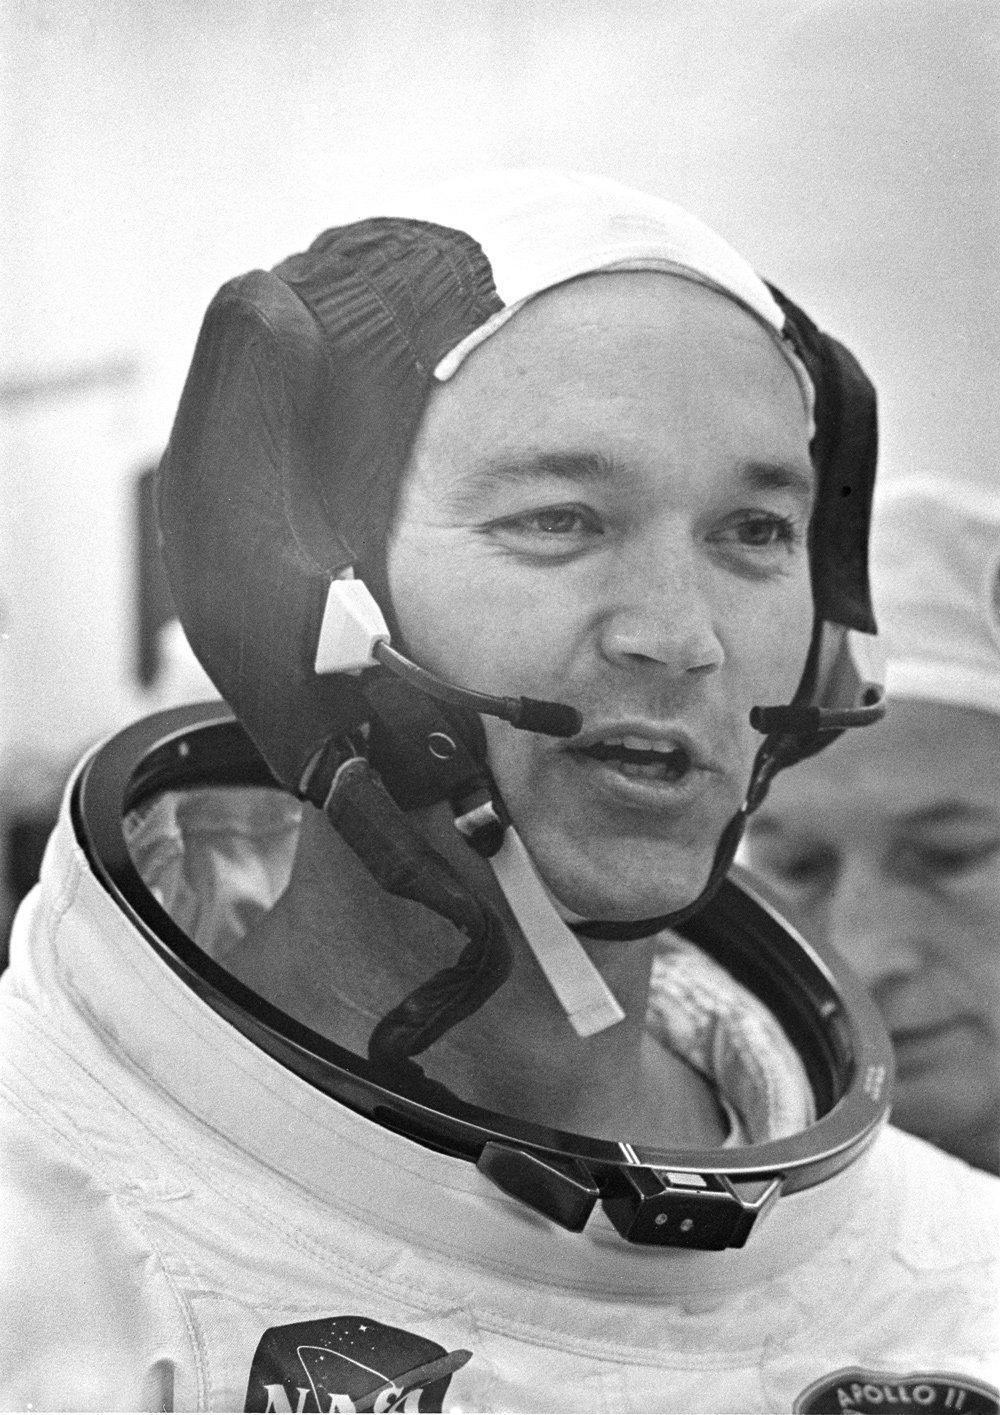 Command Module pilot Michael Collins in his space suit